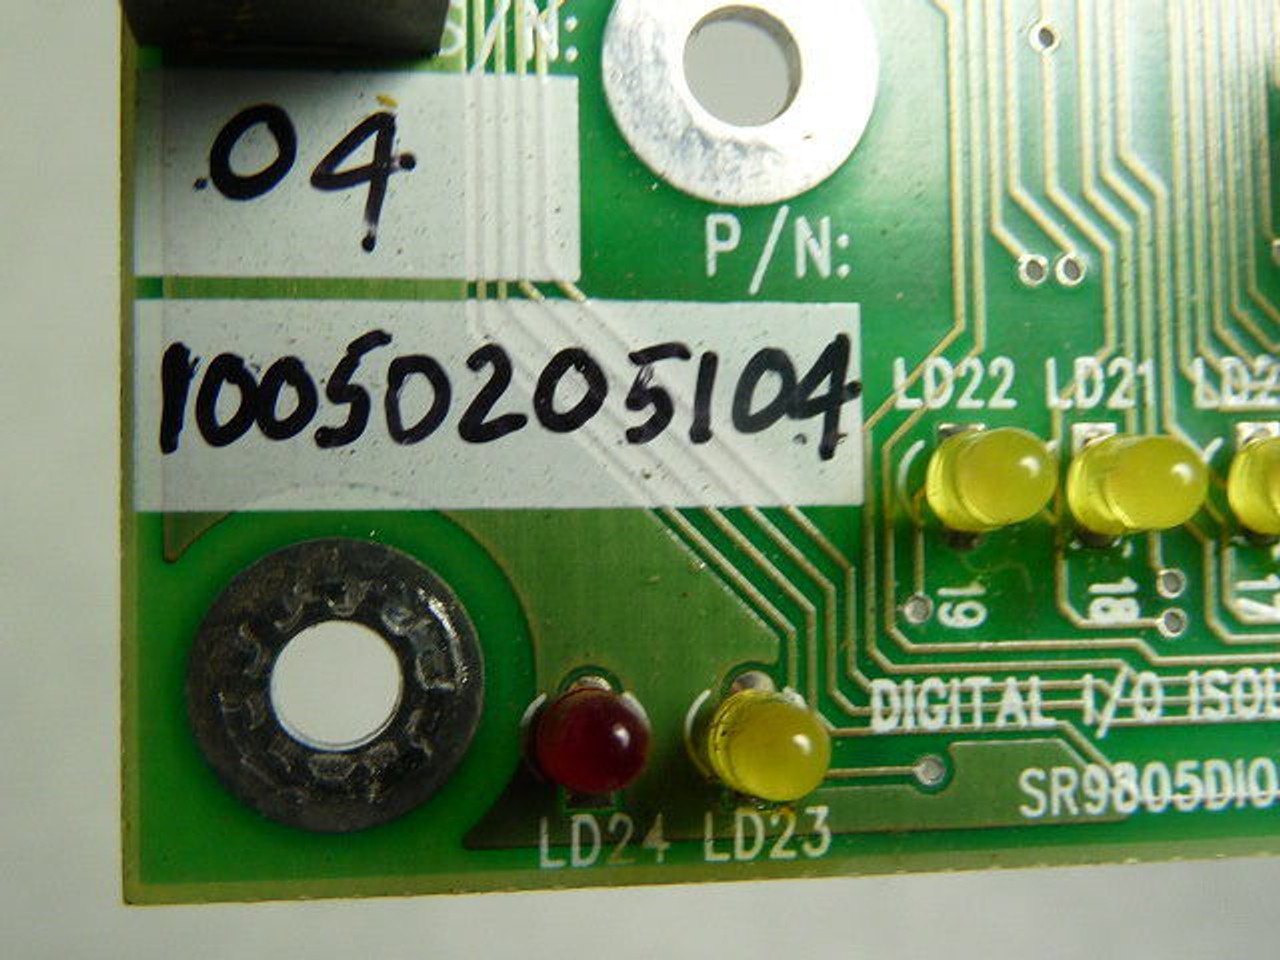 Servo Robot SR9805DI0 10050205104 Digital I/O Isolation Board USED